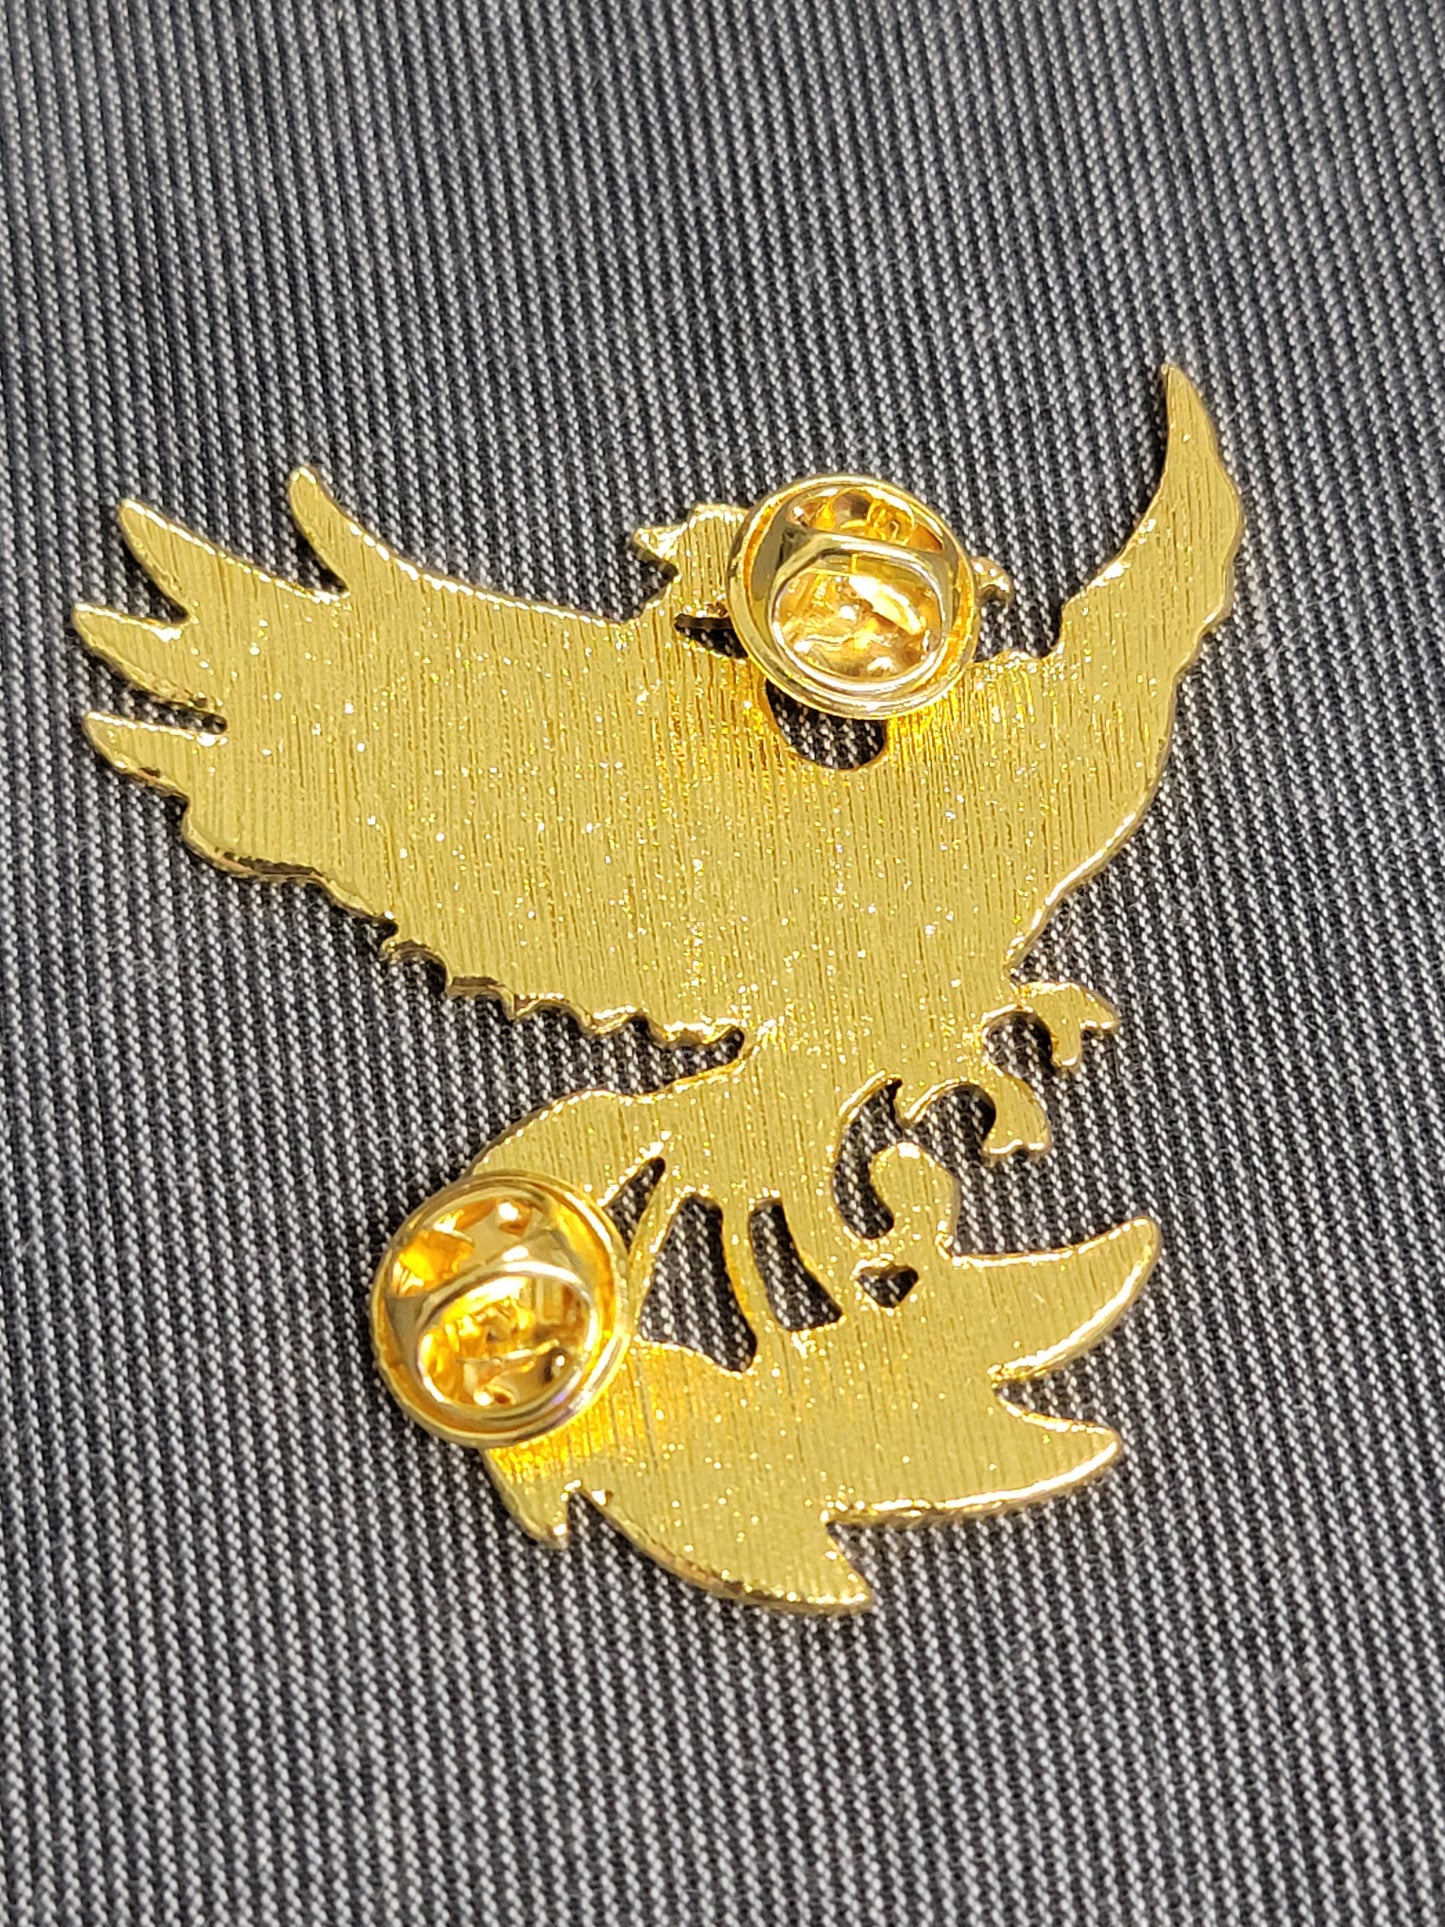 Phoenix Enamel Pin Metal Gothic Style Brooch